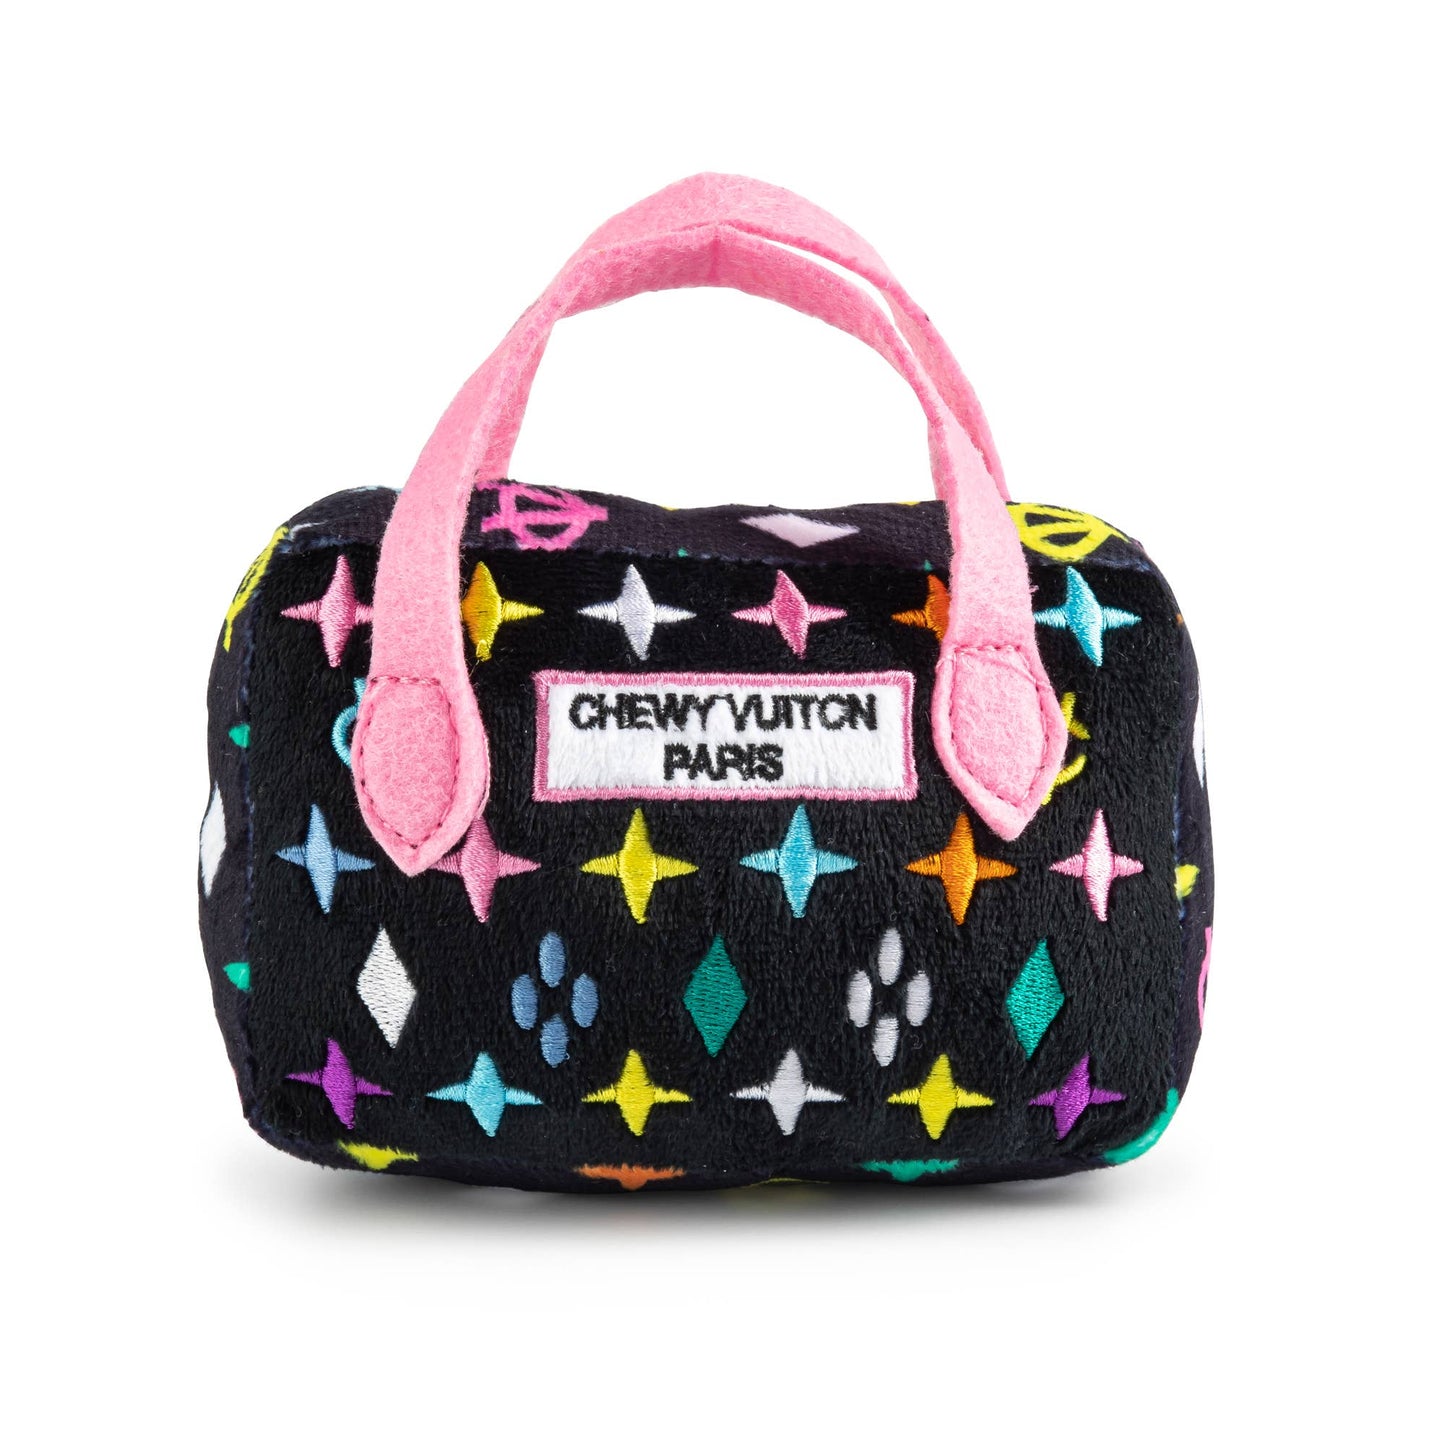 Haute Diggity Dog - Black Monogram Chewy Vuiton Handbag Squeaker Dog Toy  Image